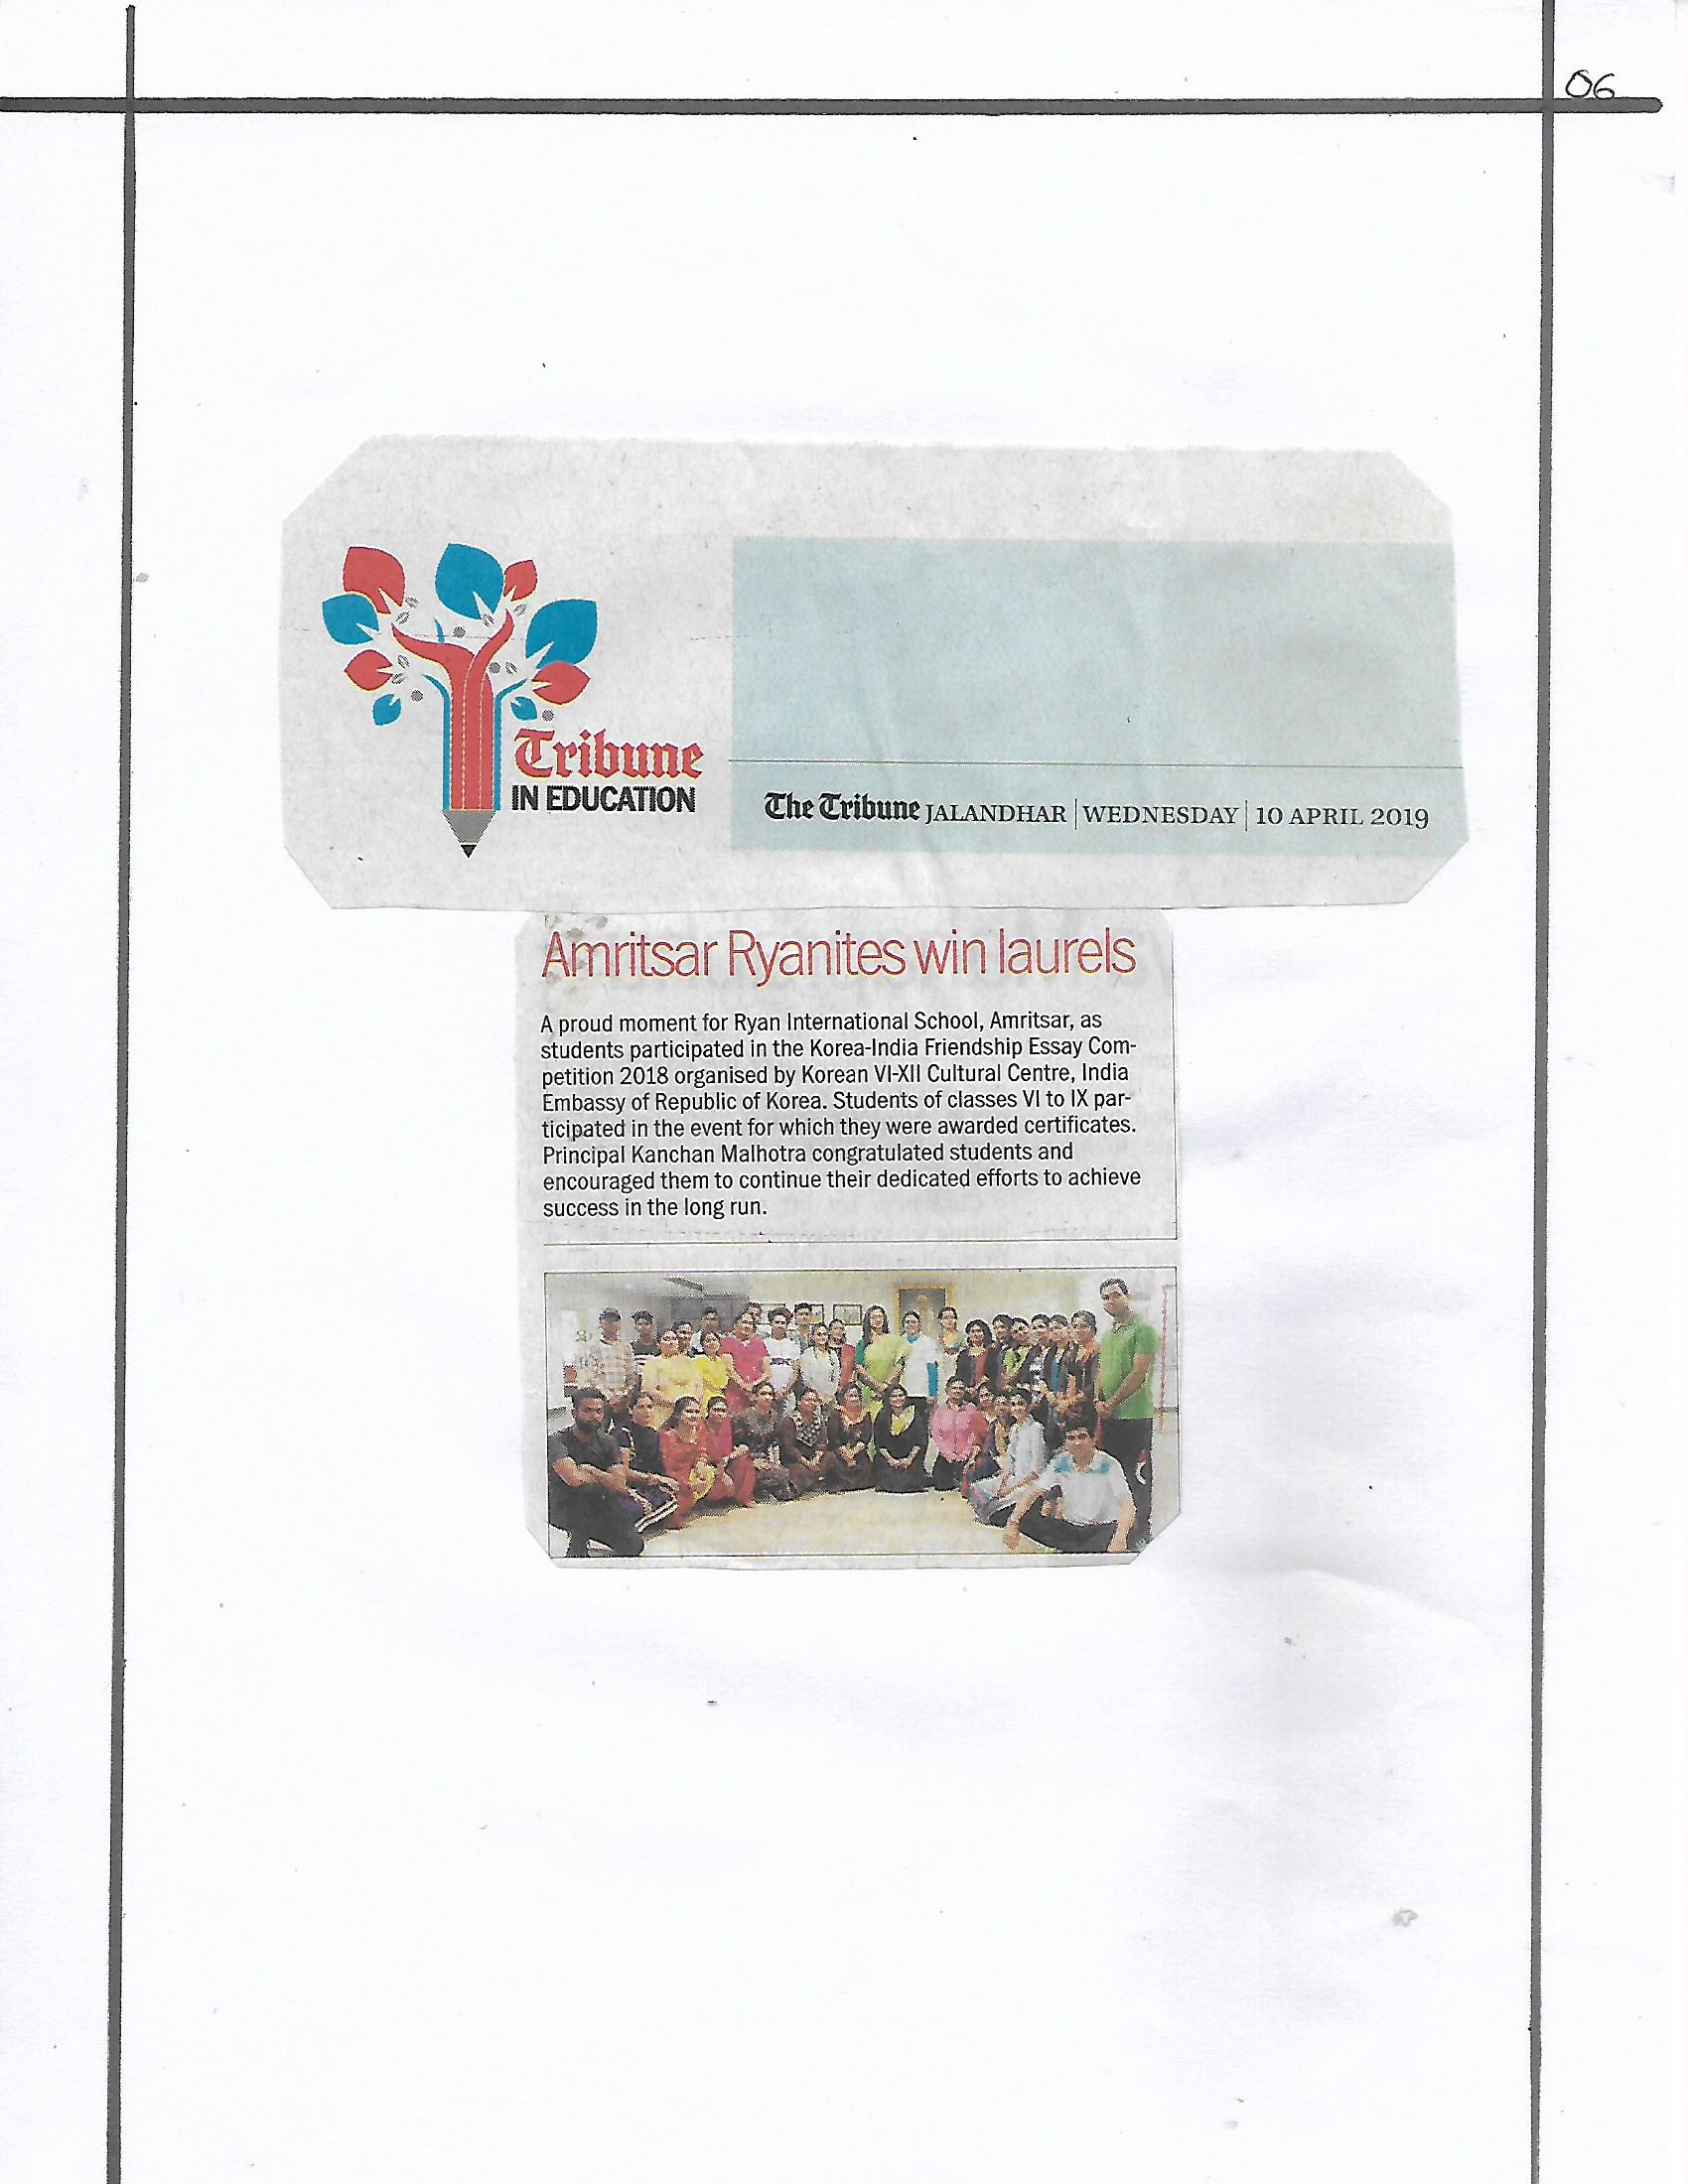 Korea-India Friendship Essay Competition’ - The Tribune - Ryan International School, Amritsar